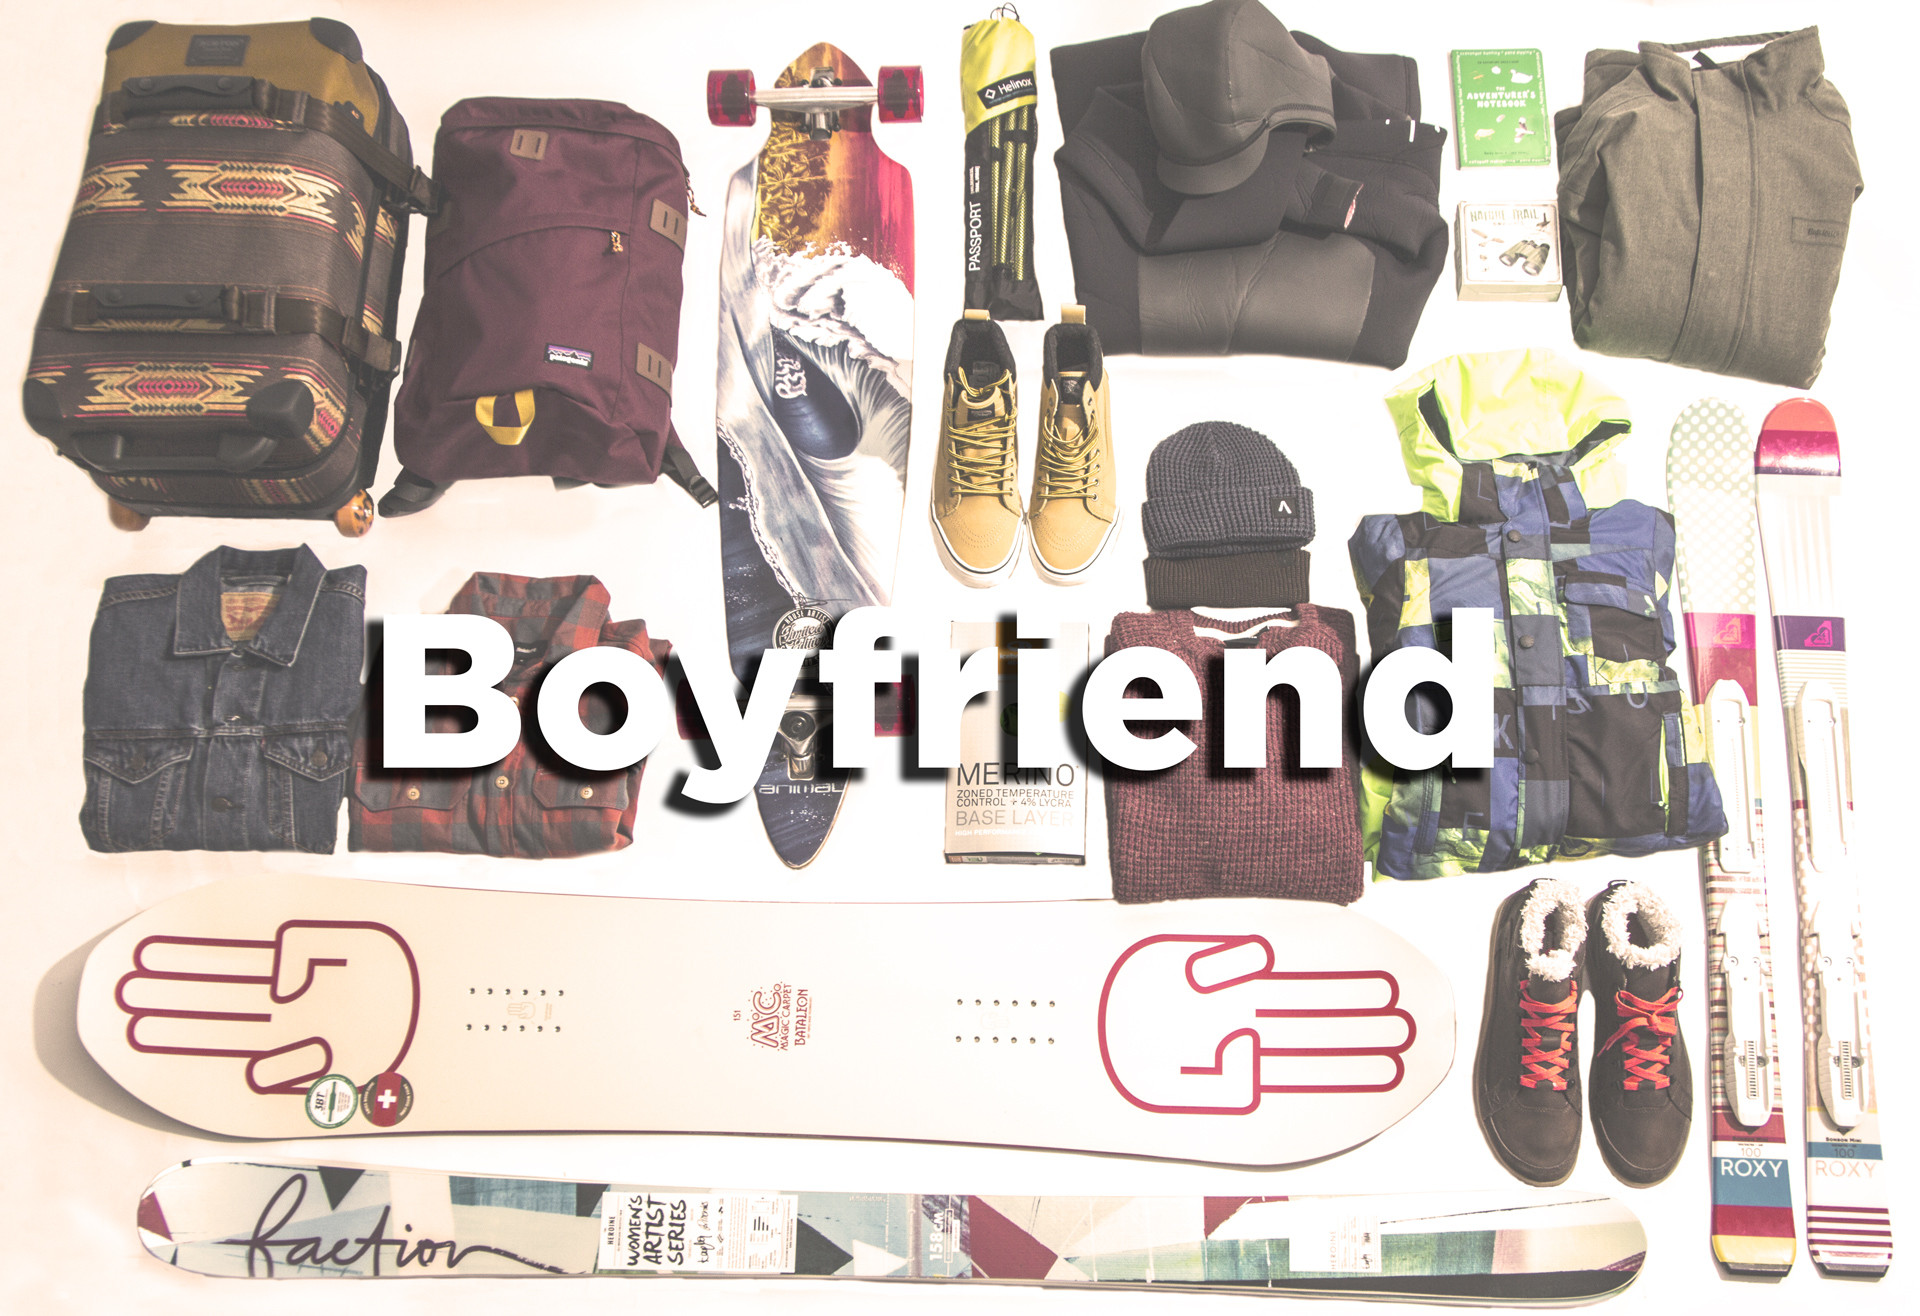 Gift Ideas For Boyfriend For Christmas
 Christmas Gift Ideas For A Boyfriend 15 Great Gifts